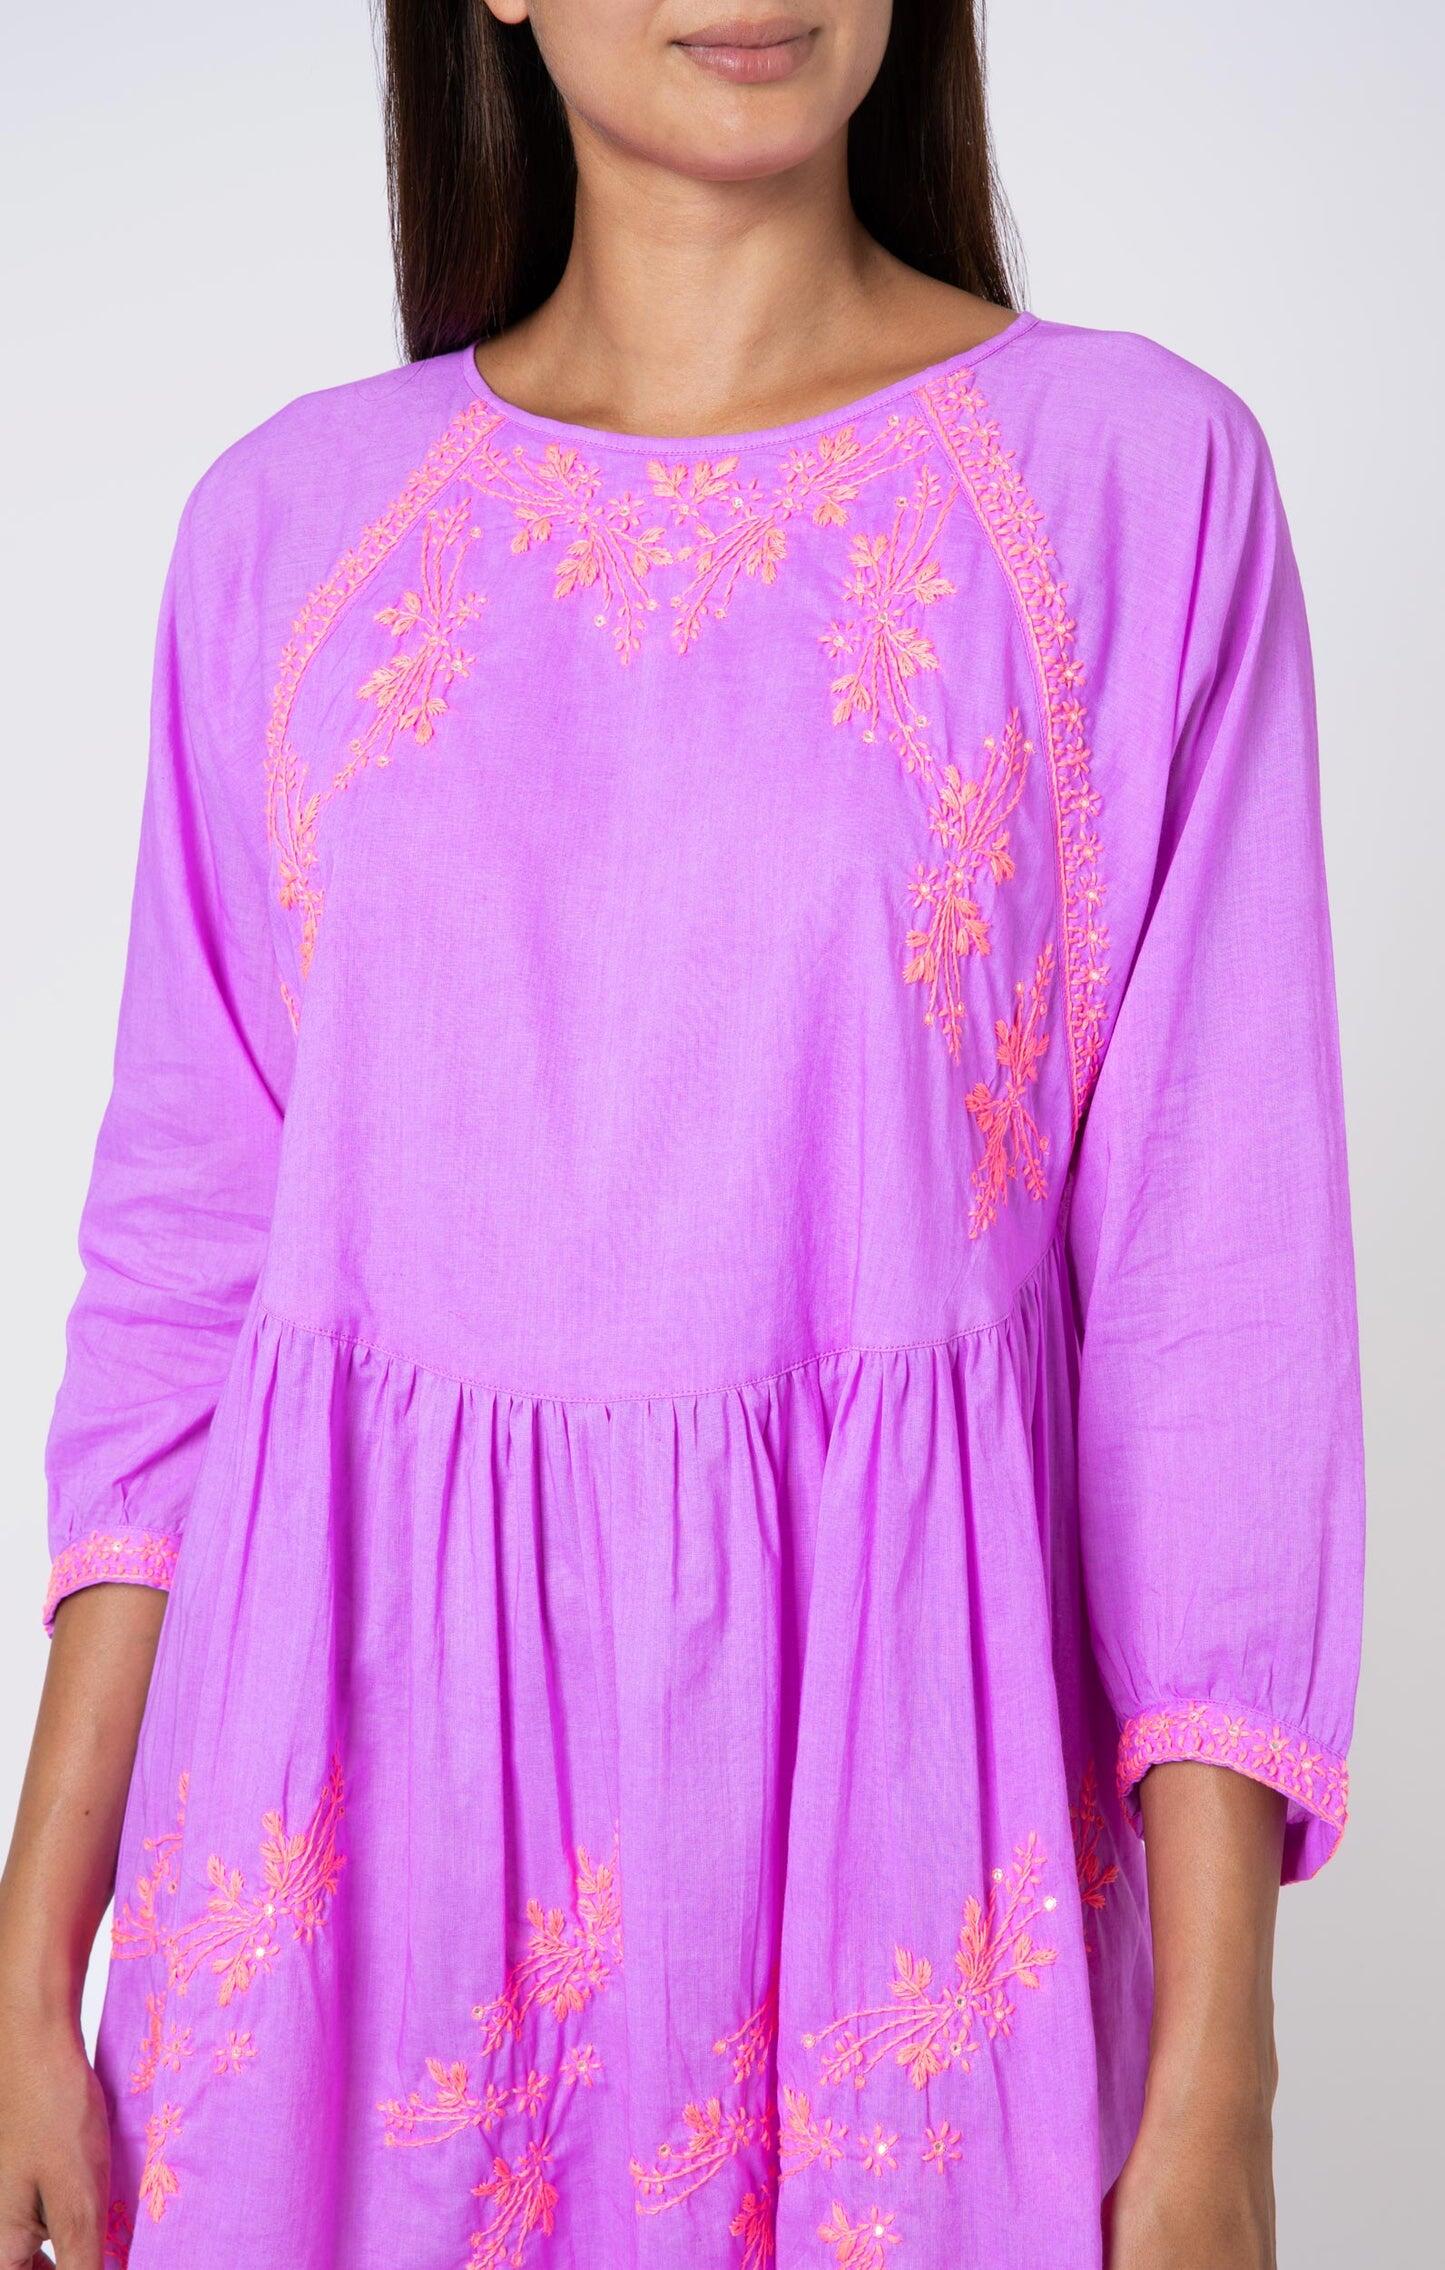 Batwing Dress W/Contrast Lotus Embro - L Violet/Neon Peach